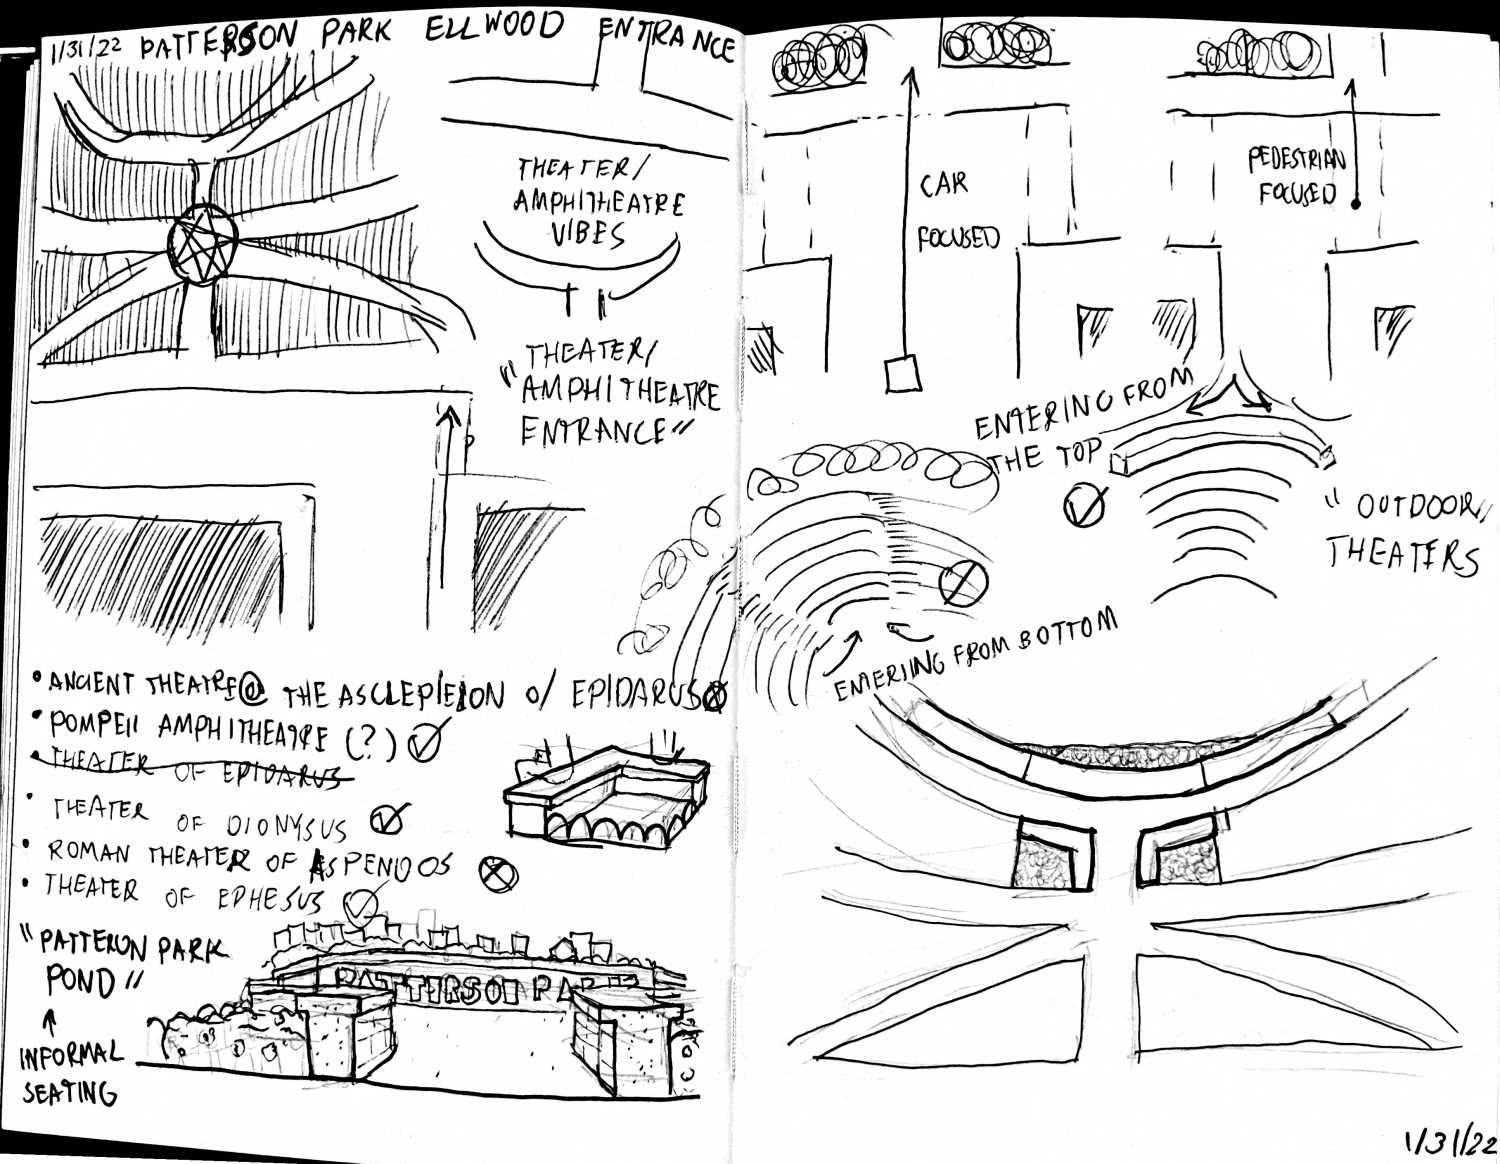 Sketches for the 3711 Patternson Park Entrance. Credit: Jonathan Melgarejo